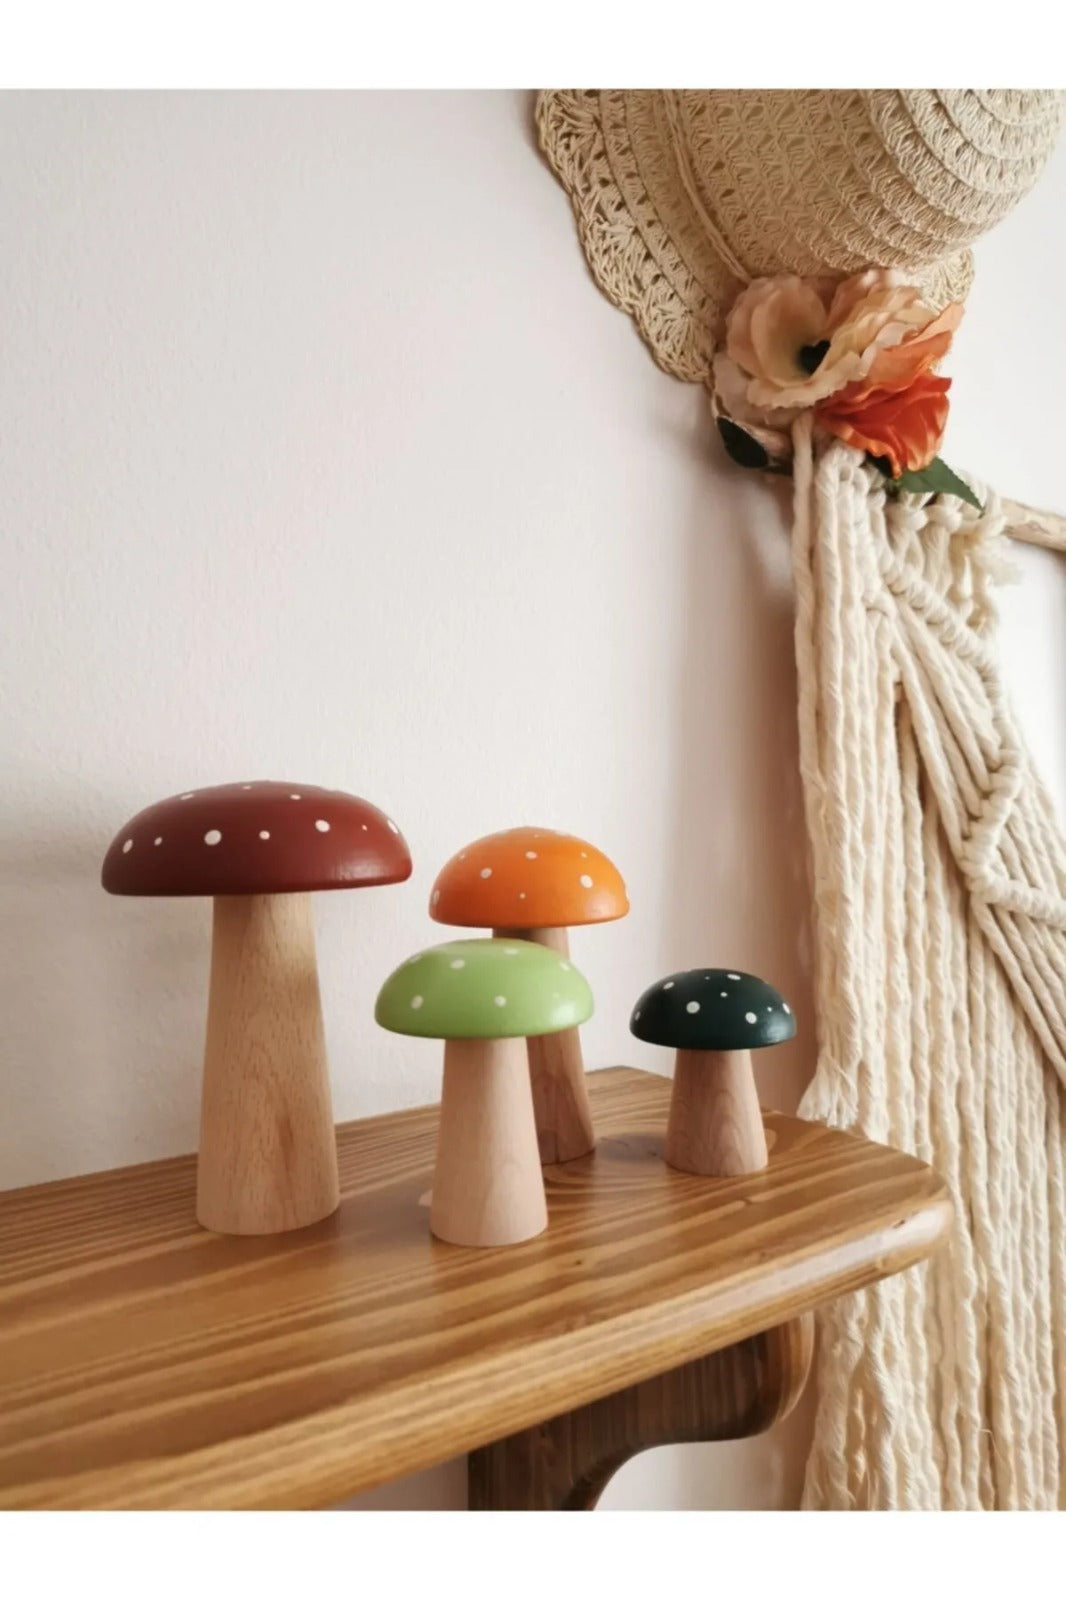 Wooden Vintage Mushroom Toy